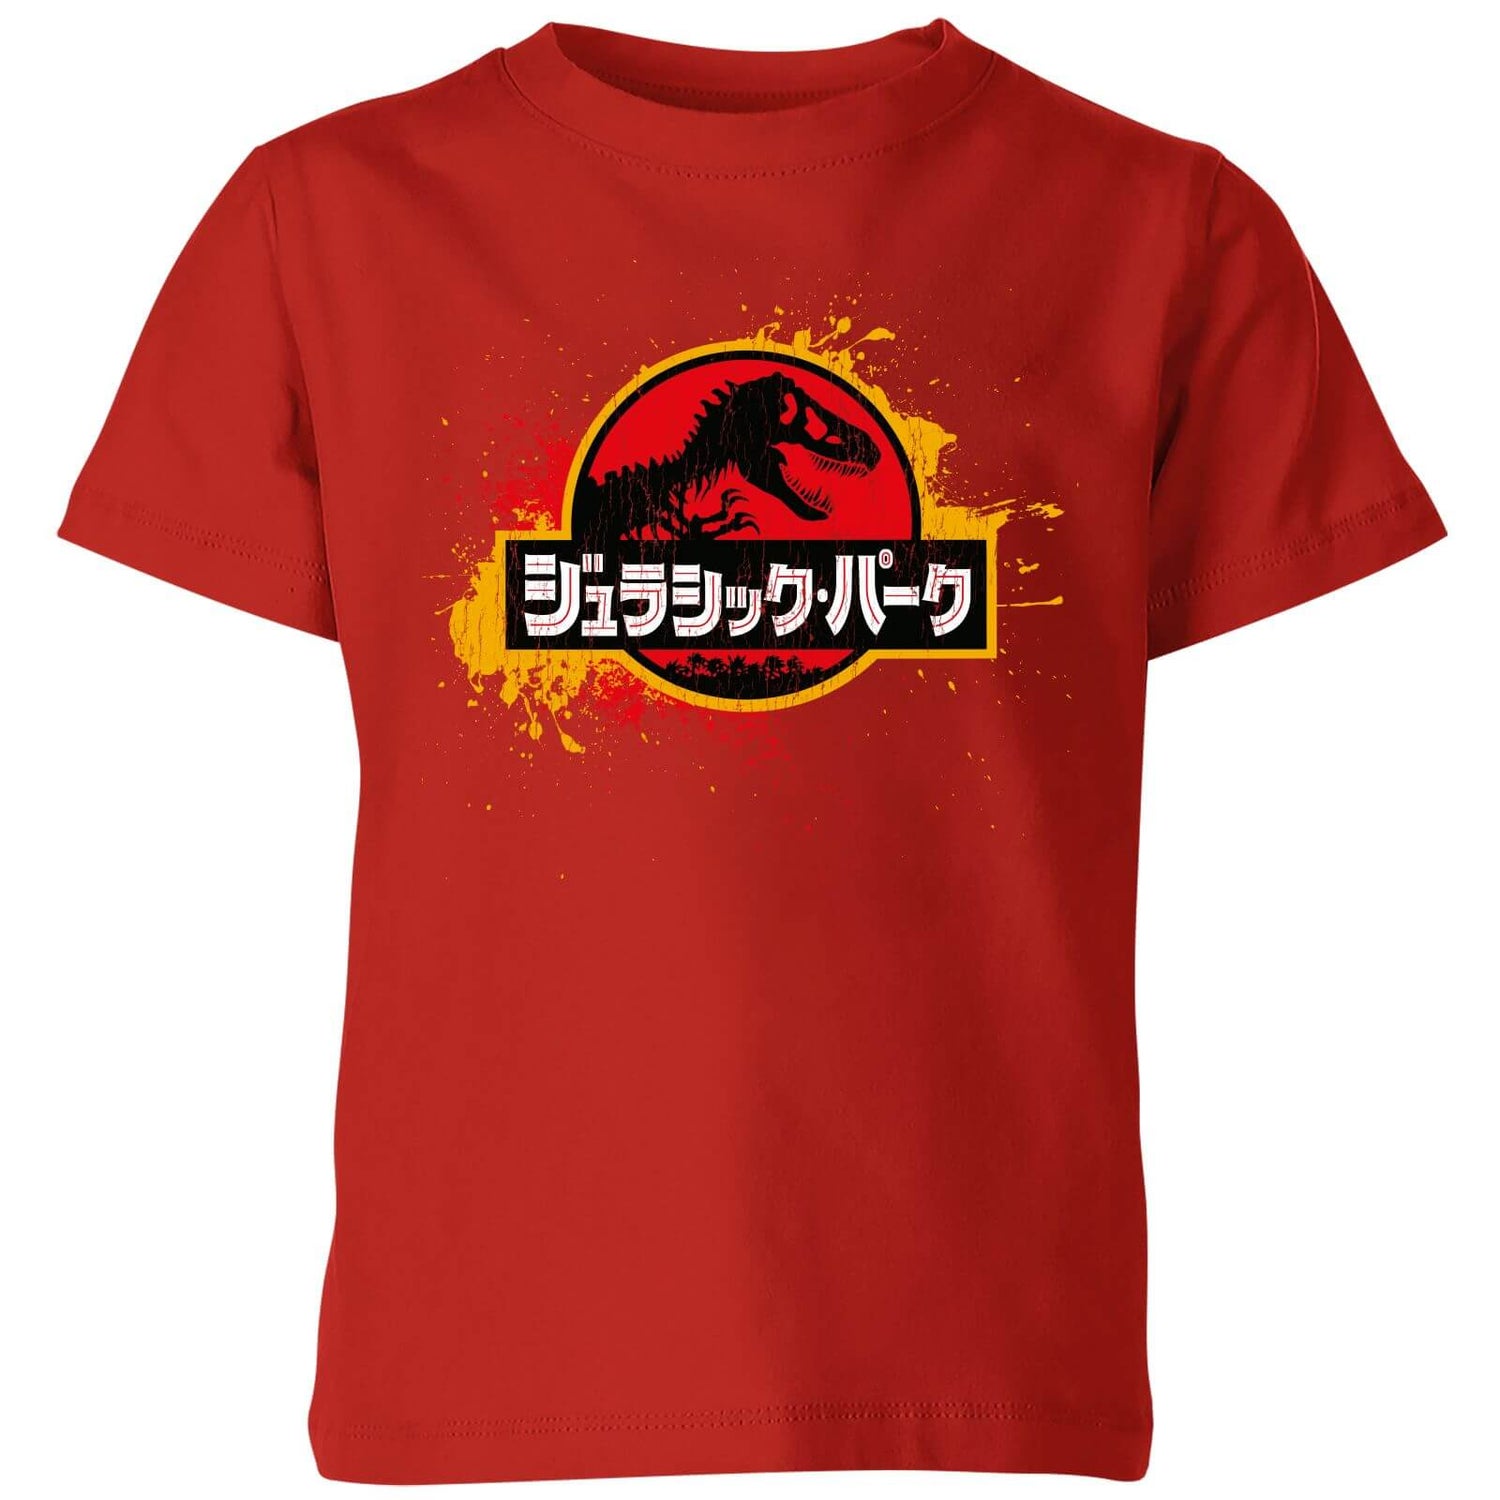 Jurassic Park Kids' T-Shirt - Red